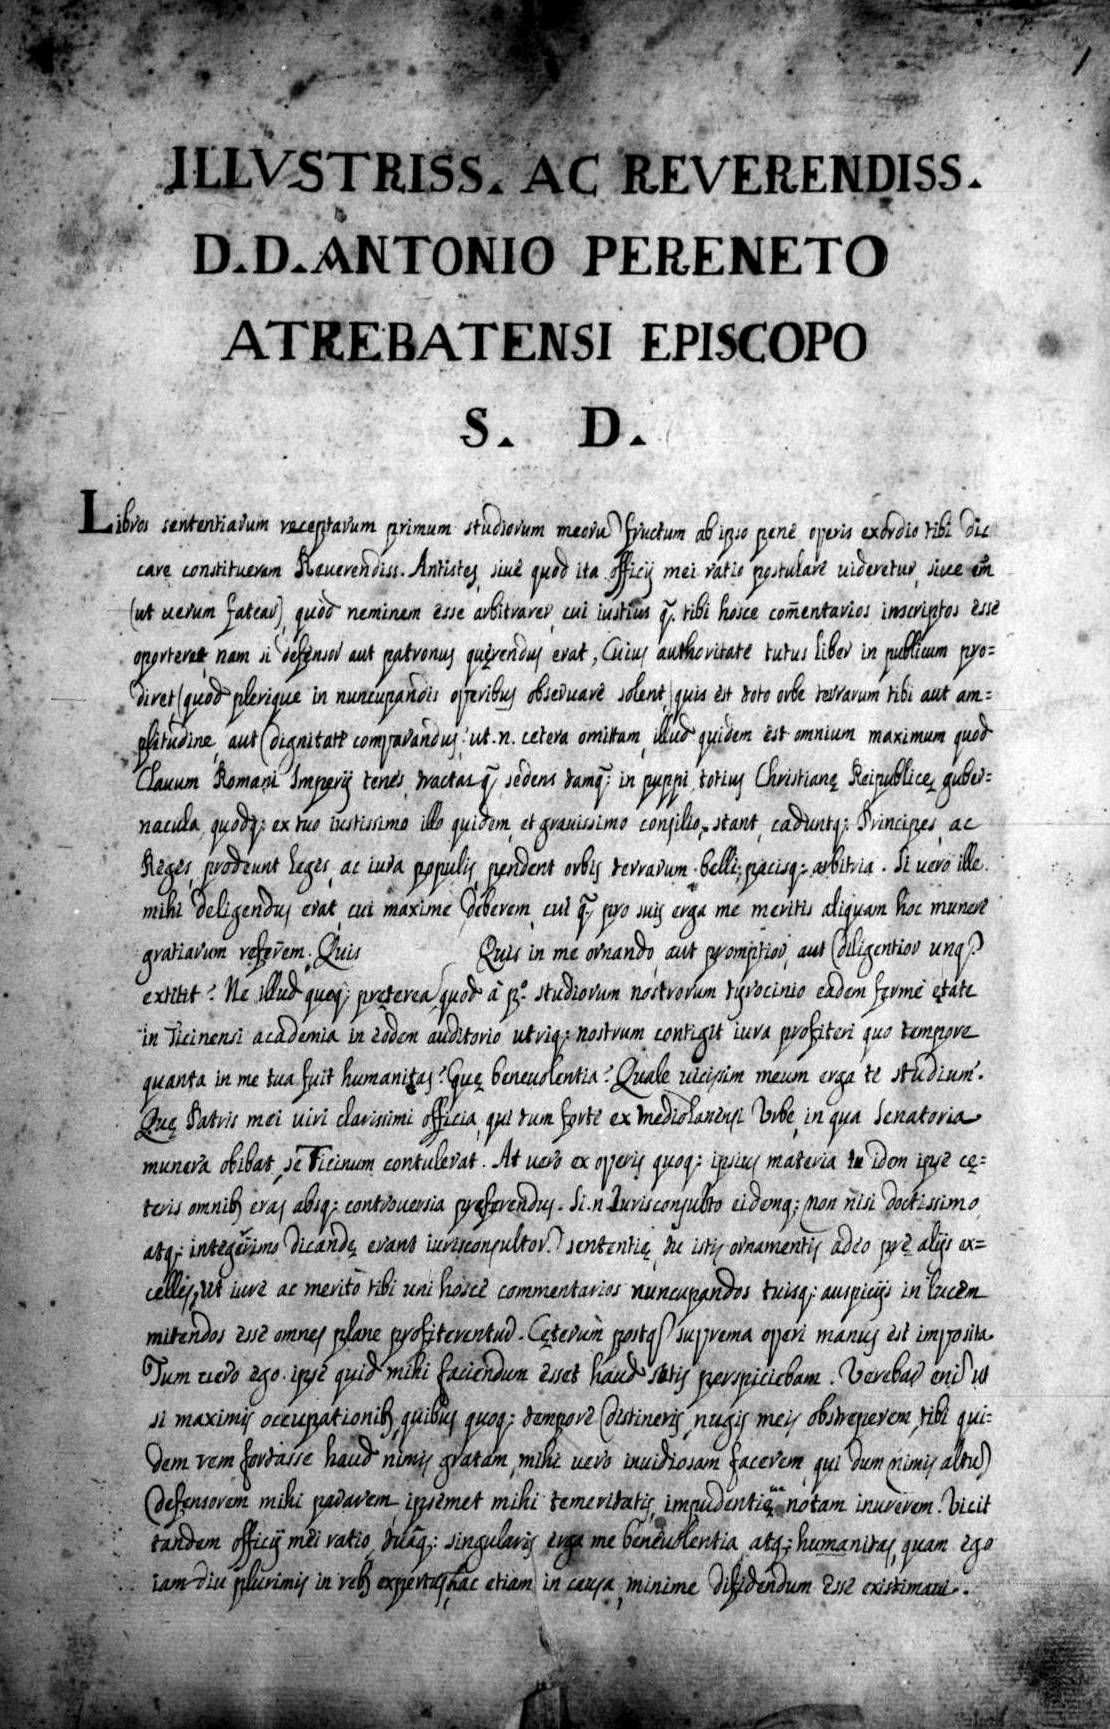 ''Libri sententiarum'', 1555 manuscript. [[Biblioteca Ambrosiana